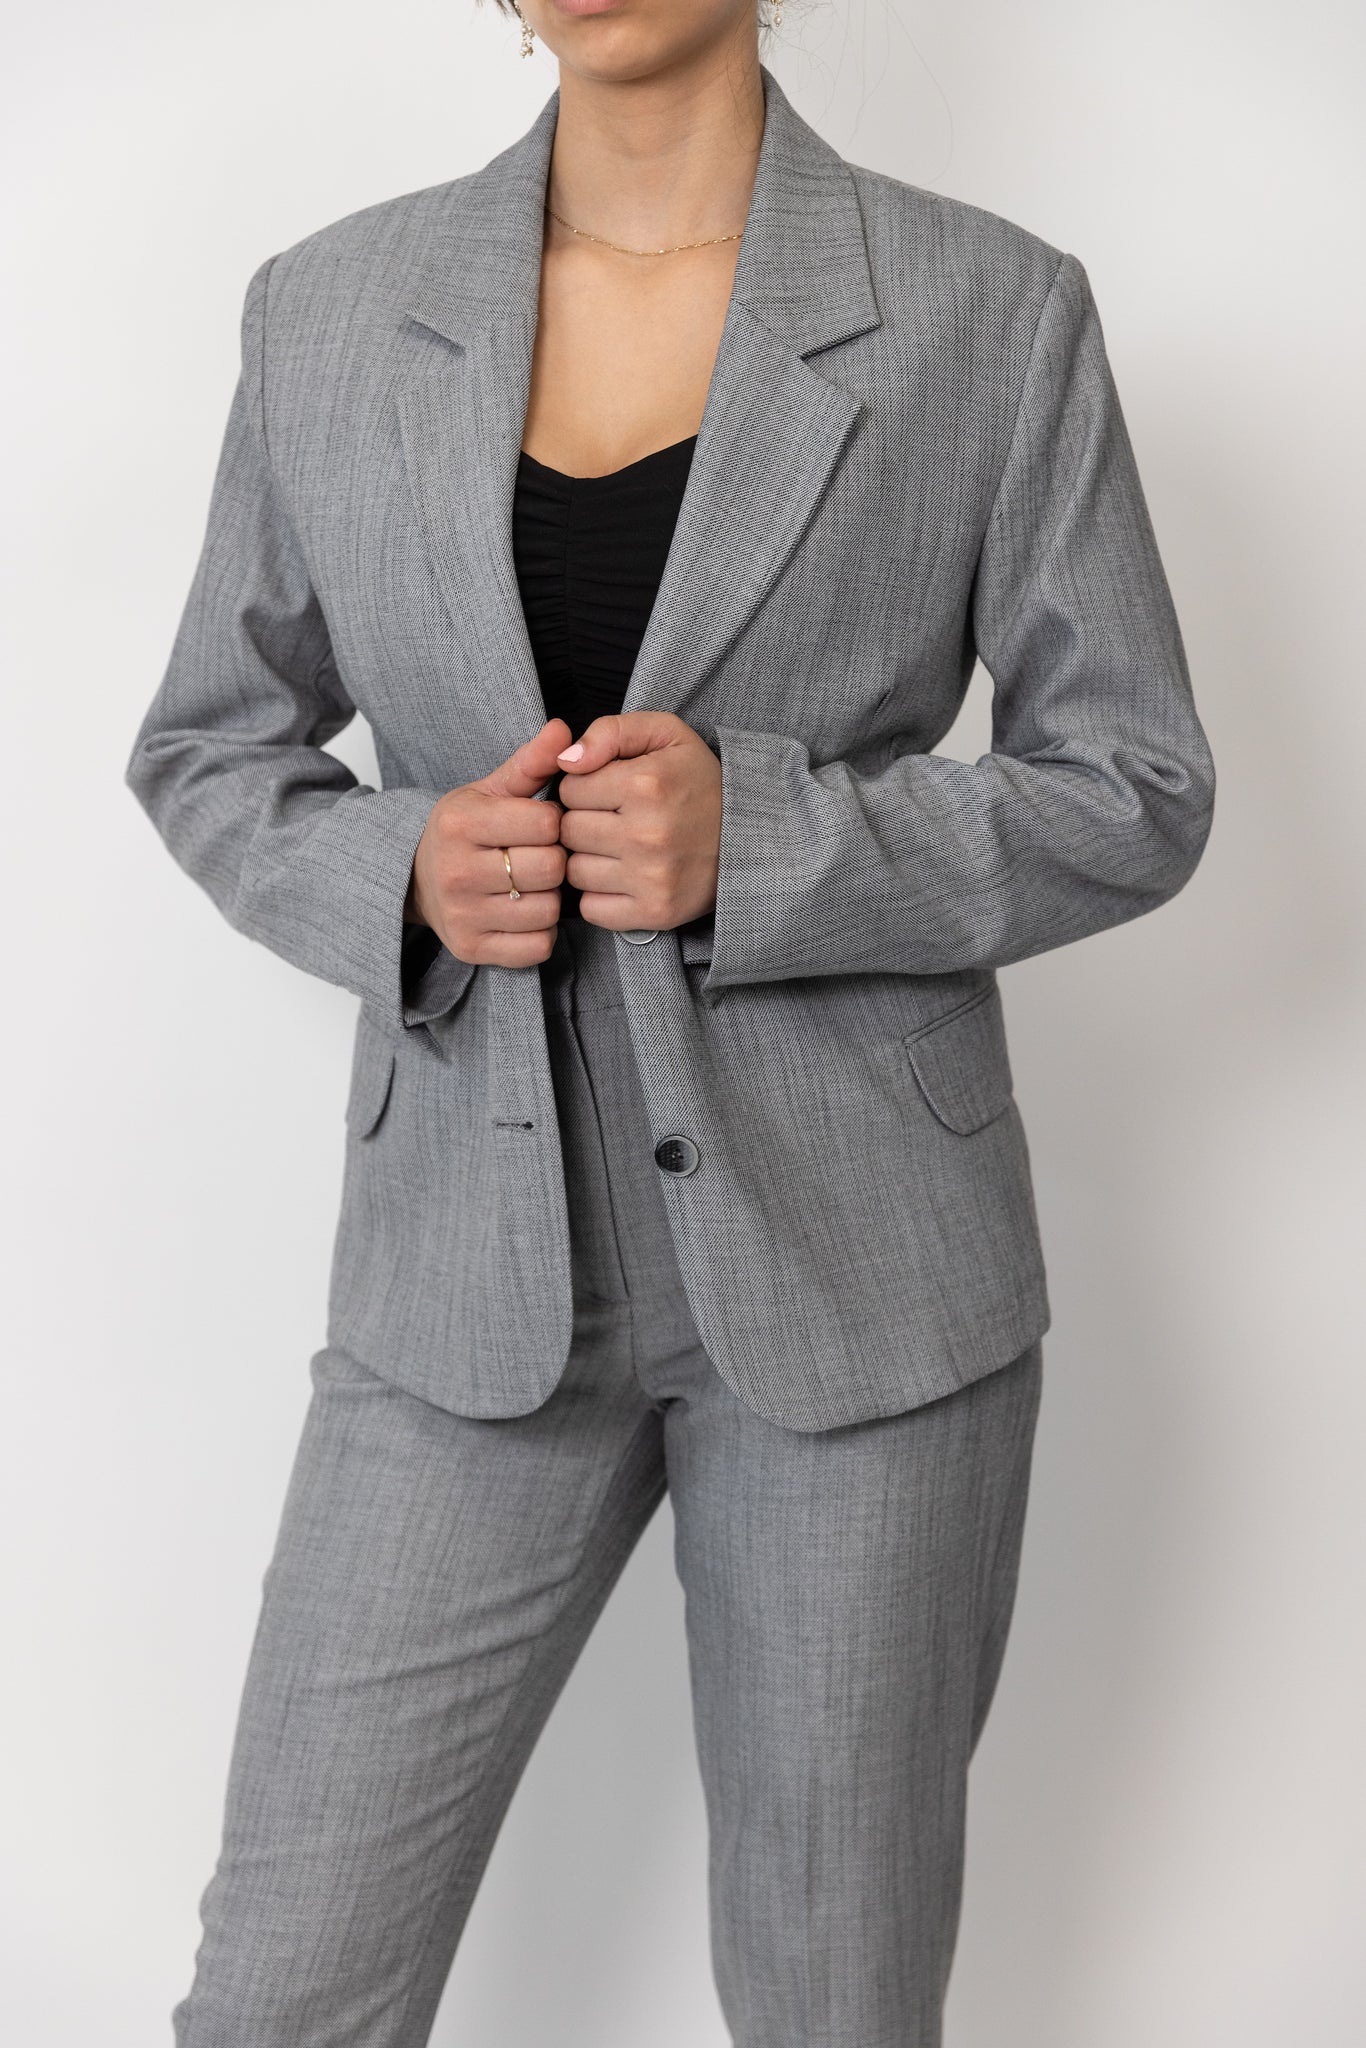 Model iført LA SUIT Elegance jakkesæt i grå.